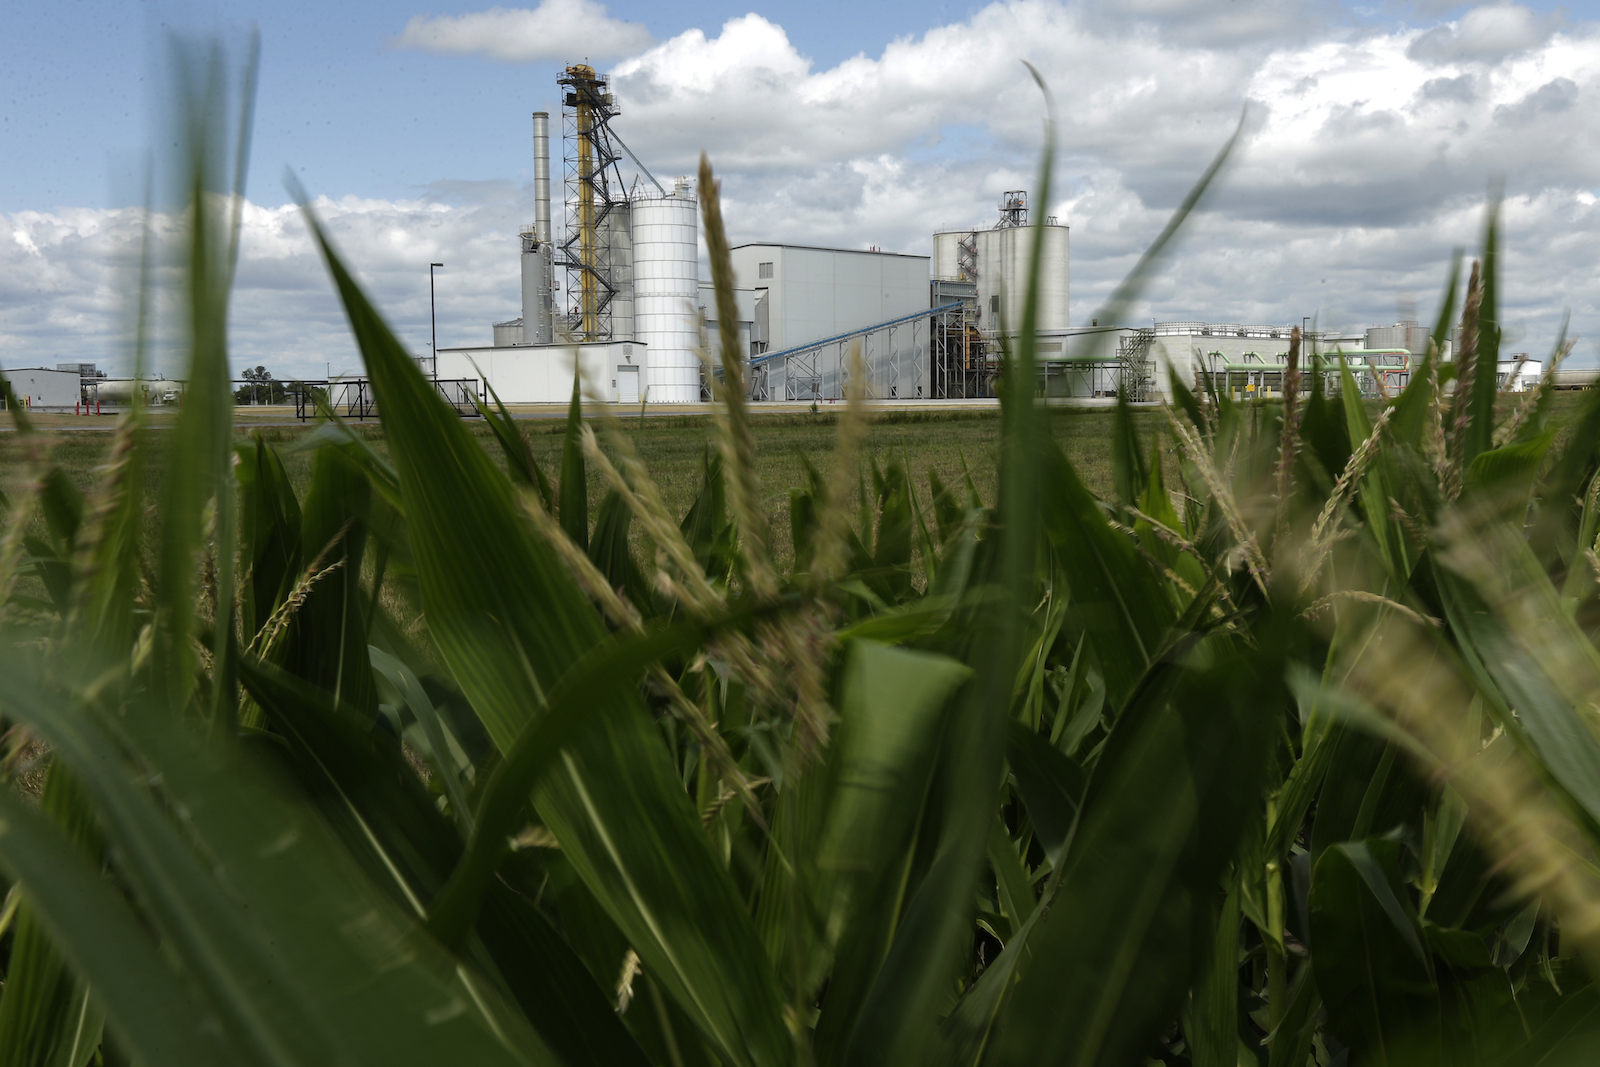 an industrial facility seen through a field of corn